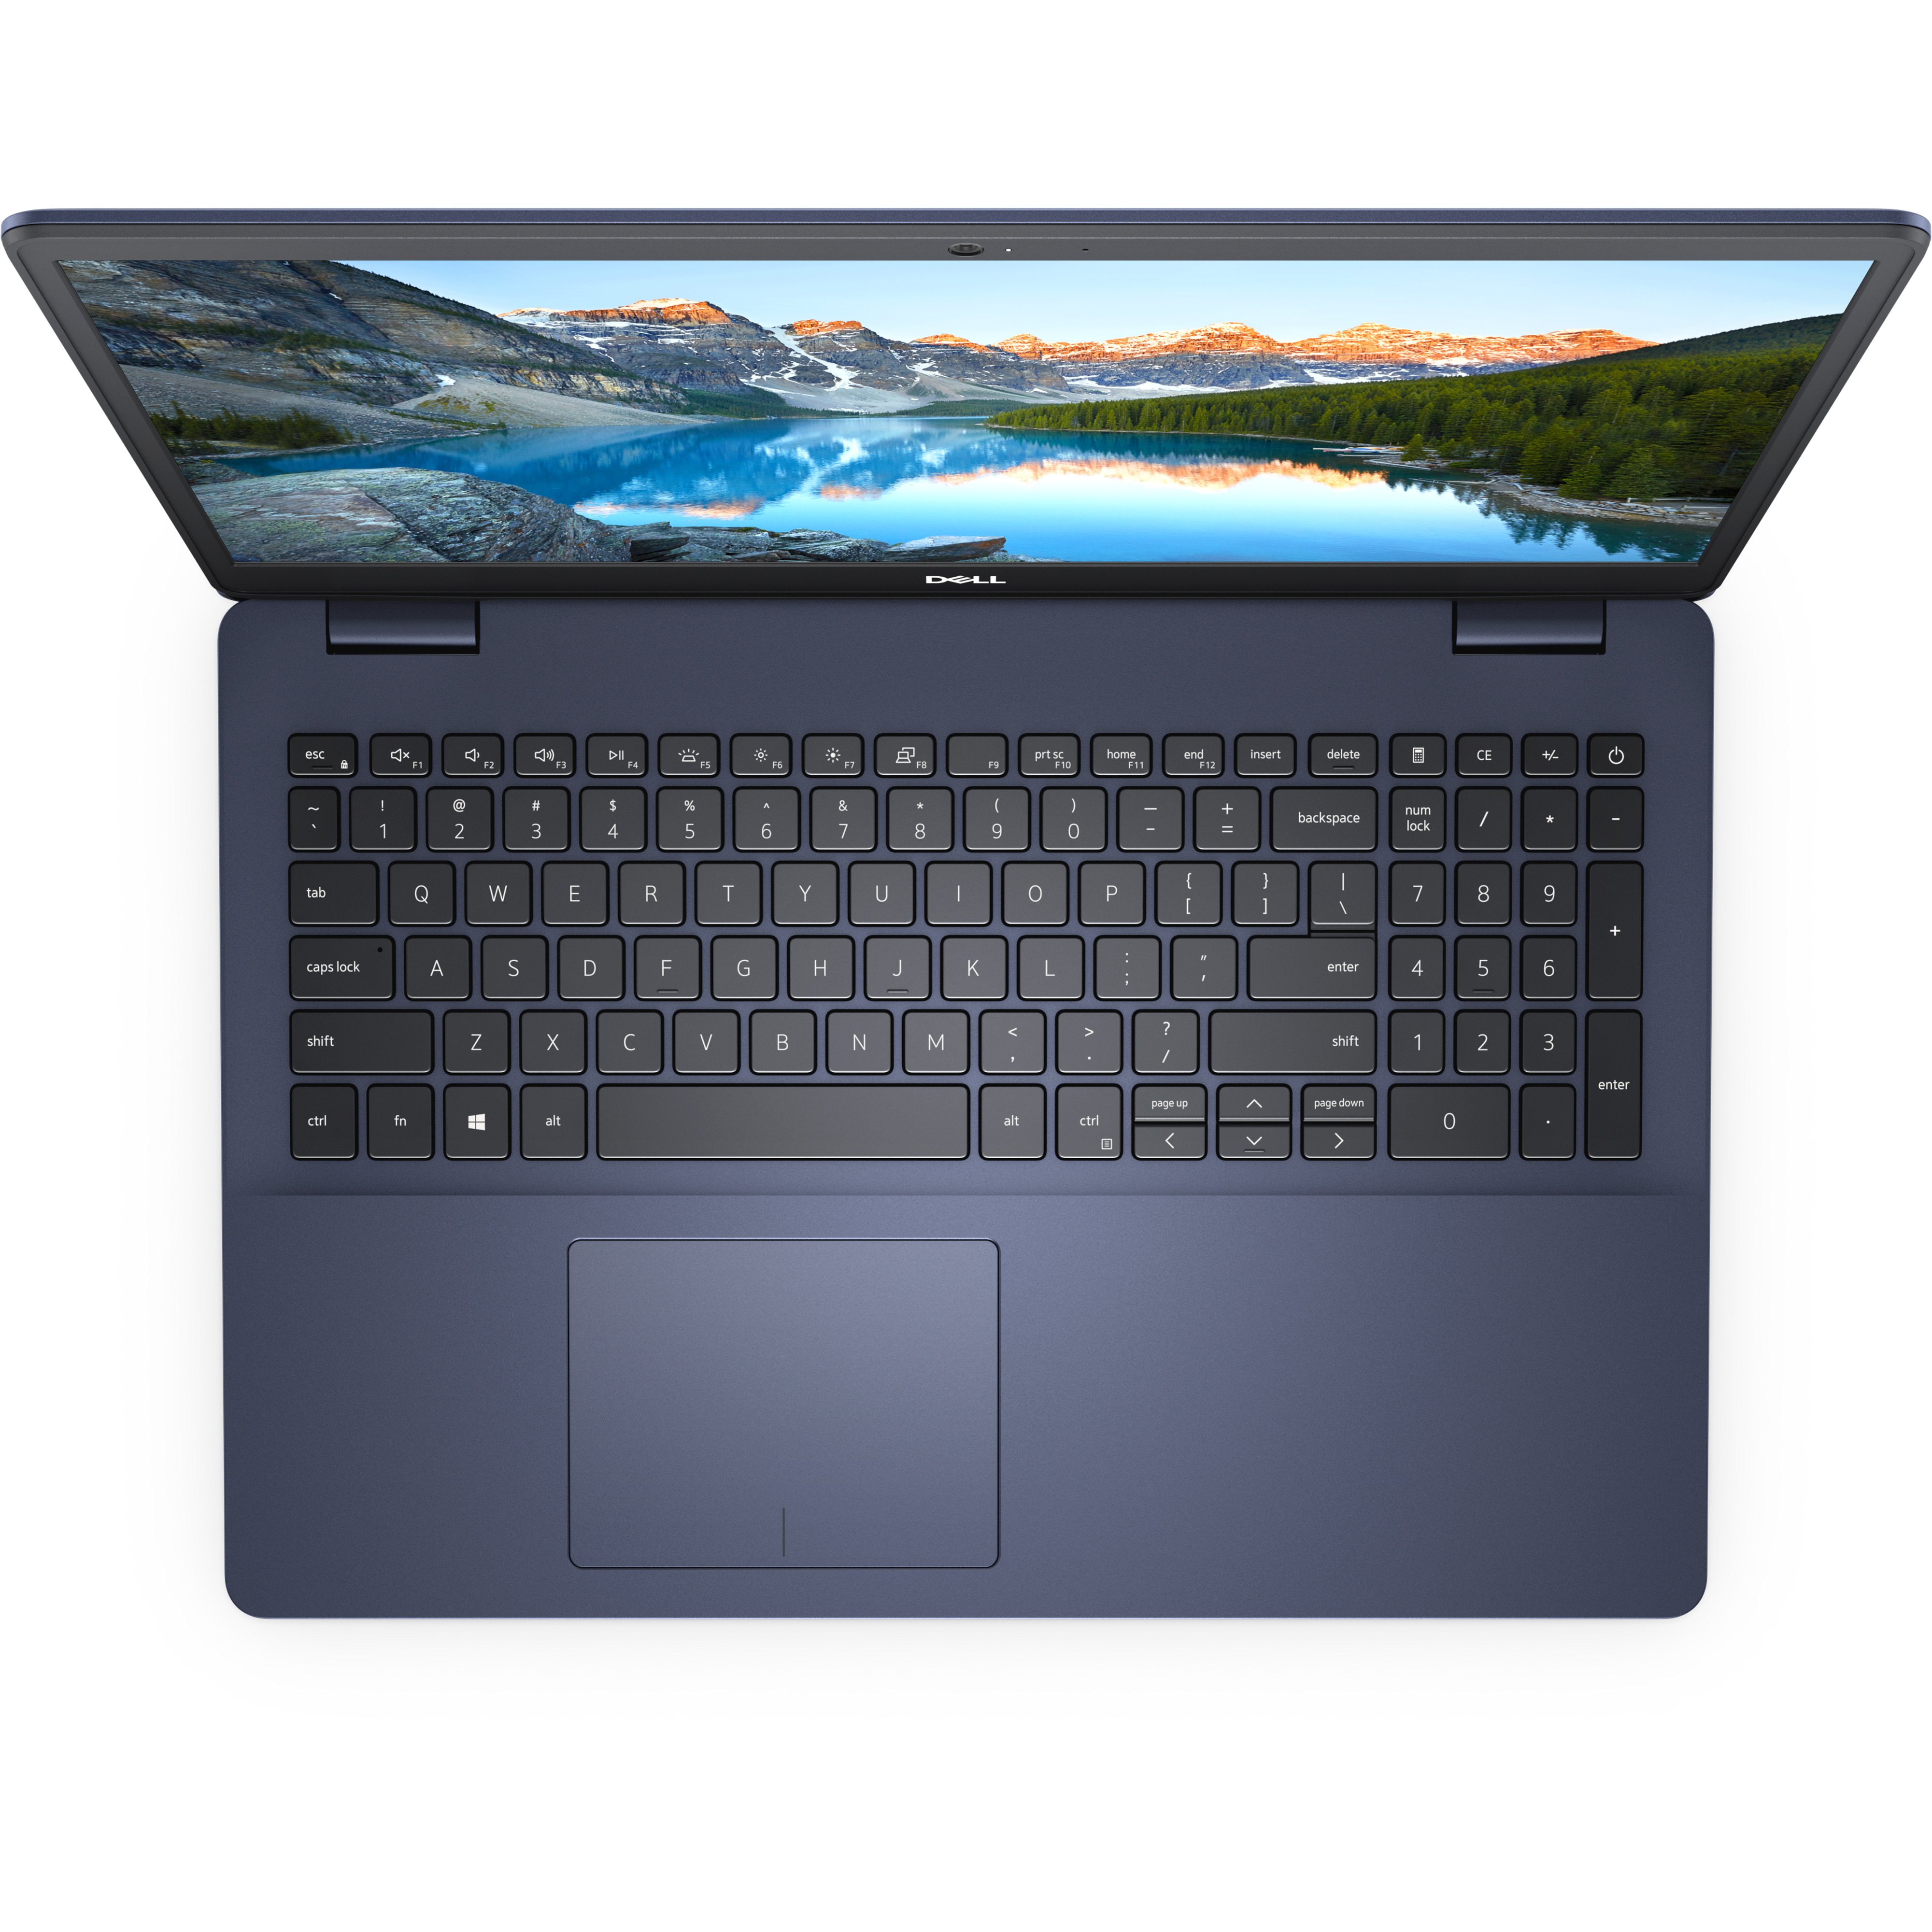 Dell Inspiron 15 5000 (5593) Laptop | Dell India